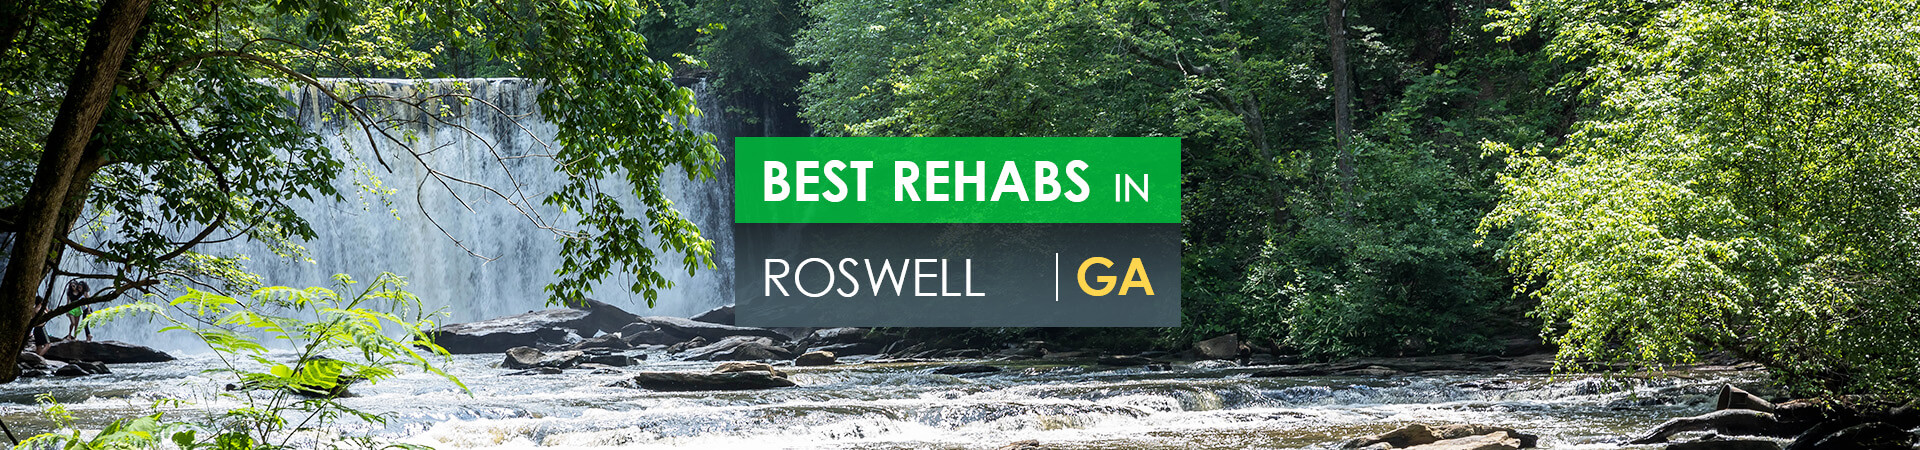 Best rehabs in Roswell, GA